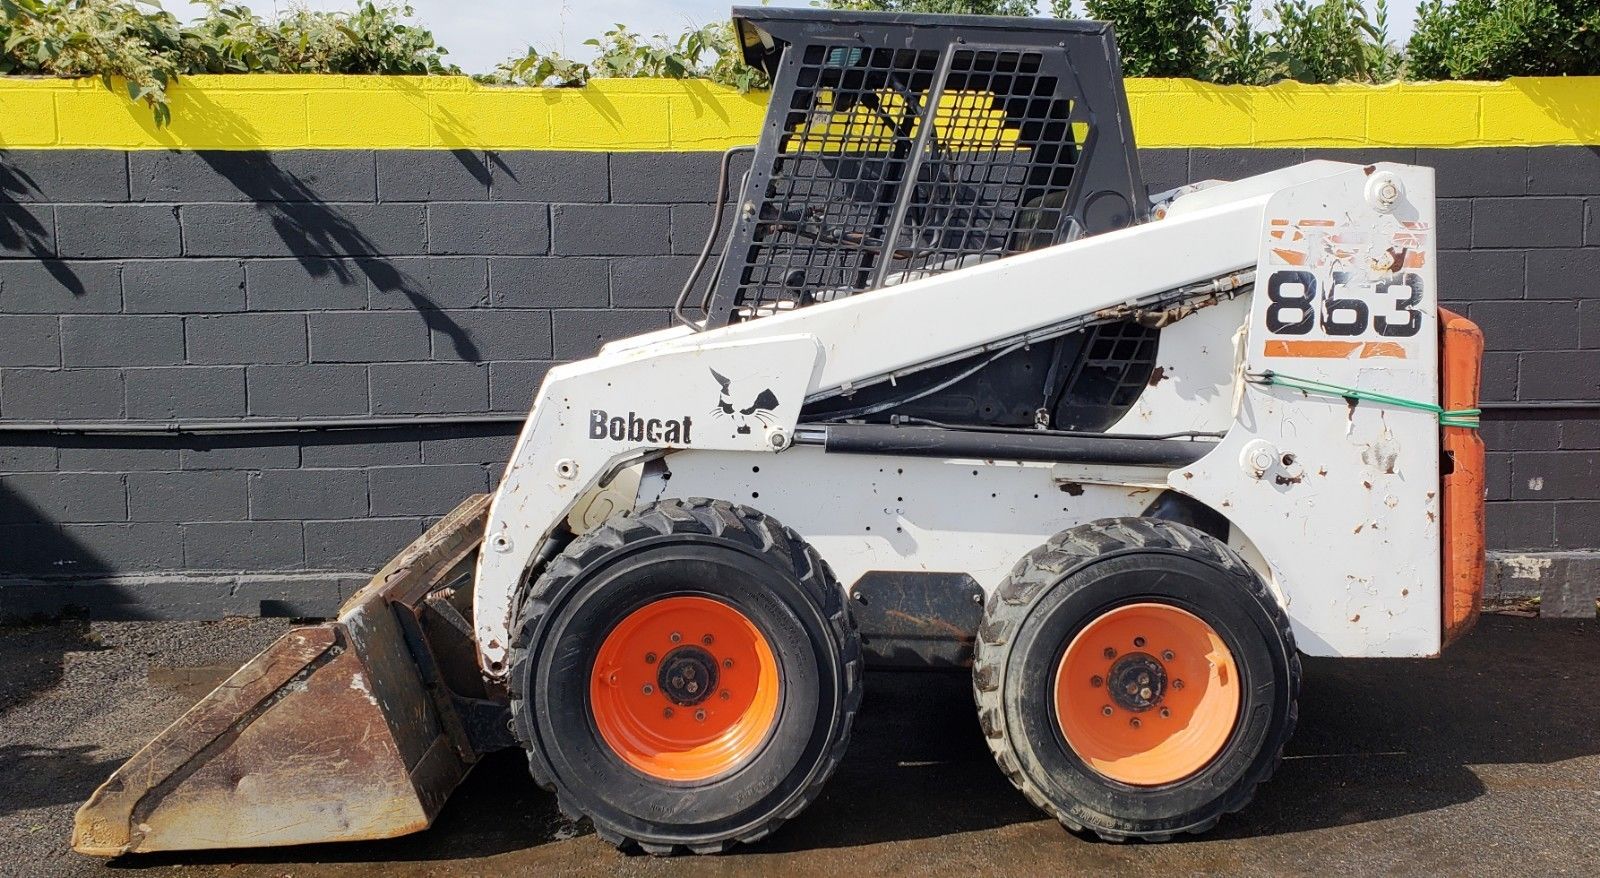 USED Bobcat 863 Rent Construction Equipment in NY, NJ, CT Durante